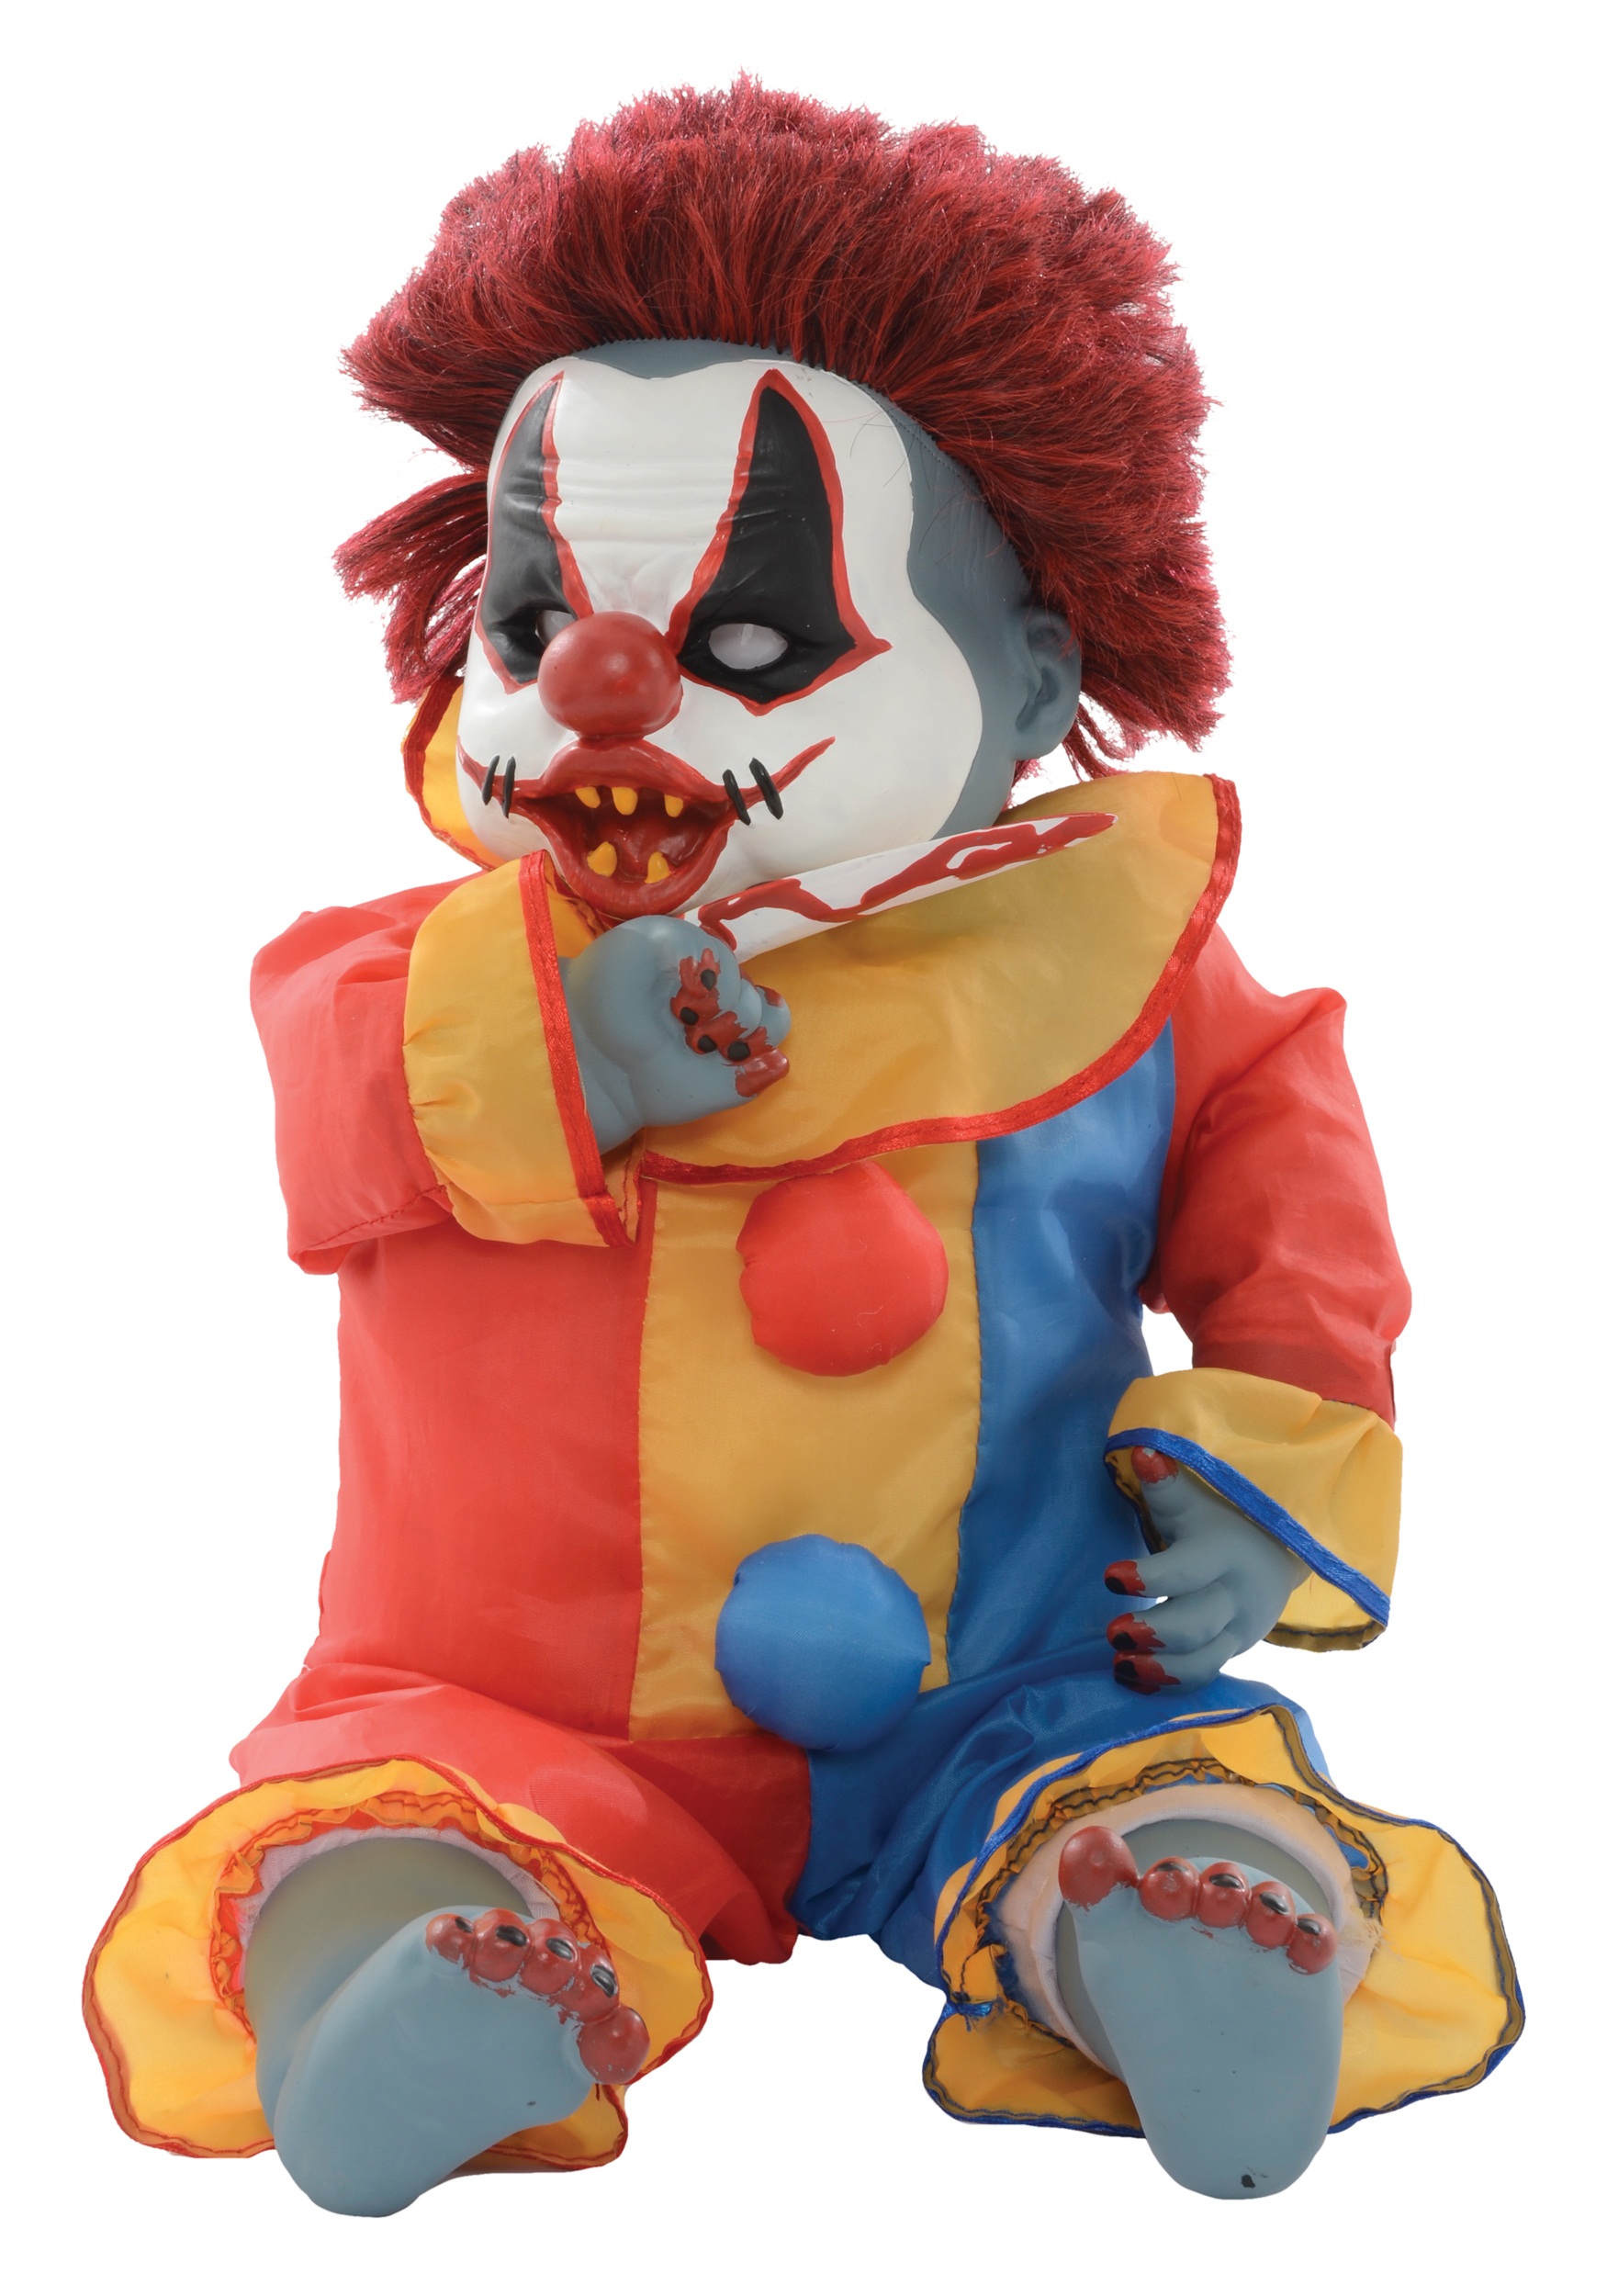 Scary Animated Clown Prop - Halloween Costume Ideas 2019